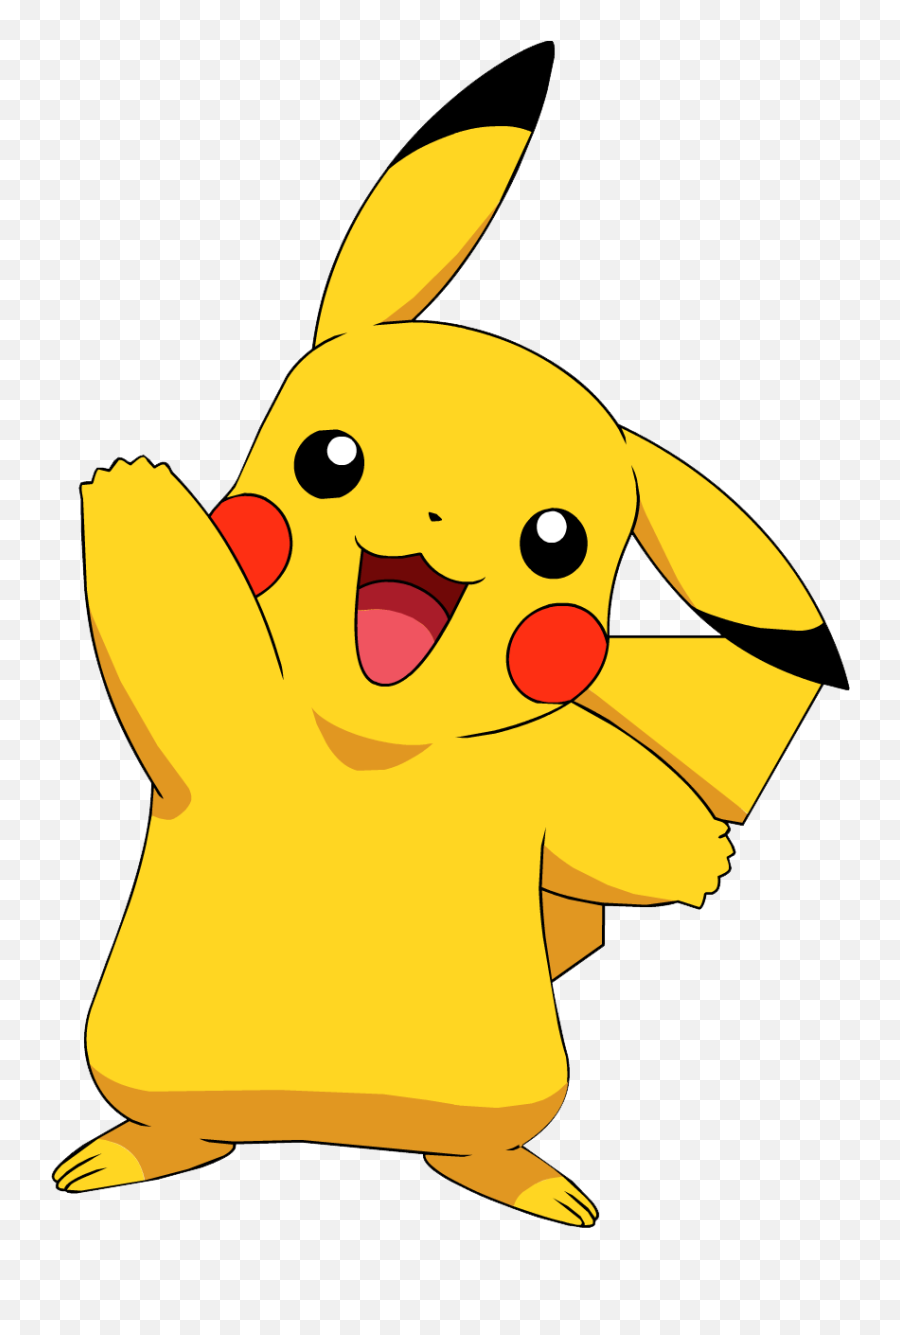 Pikachu Transparent Background - Pokemon Pikachu Emoji,Image Of Emojis No White Backround